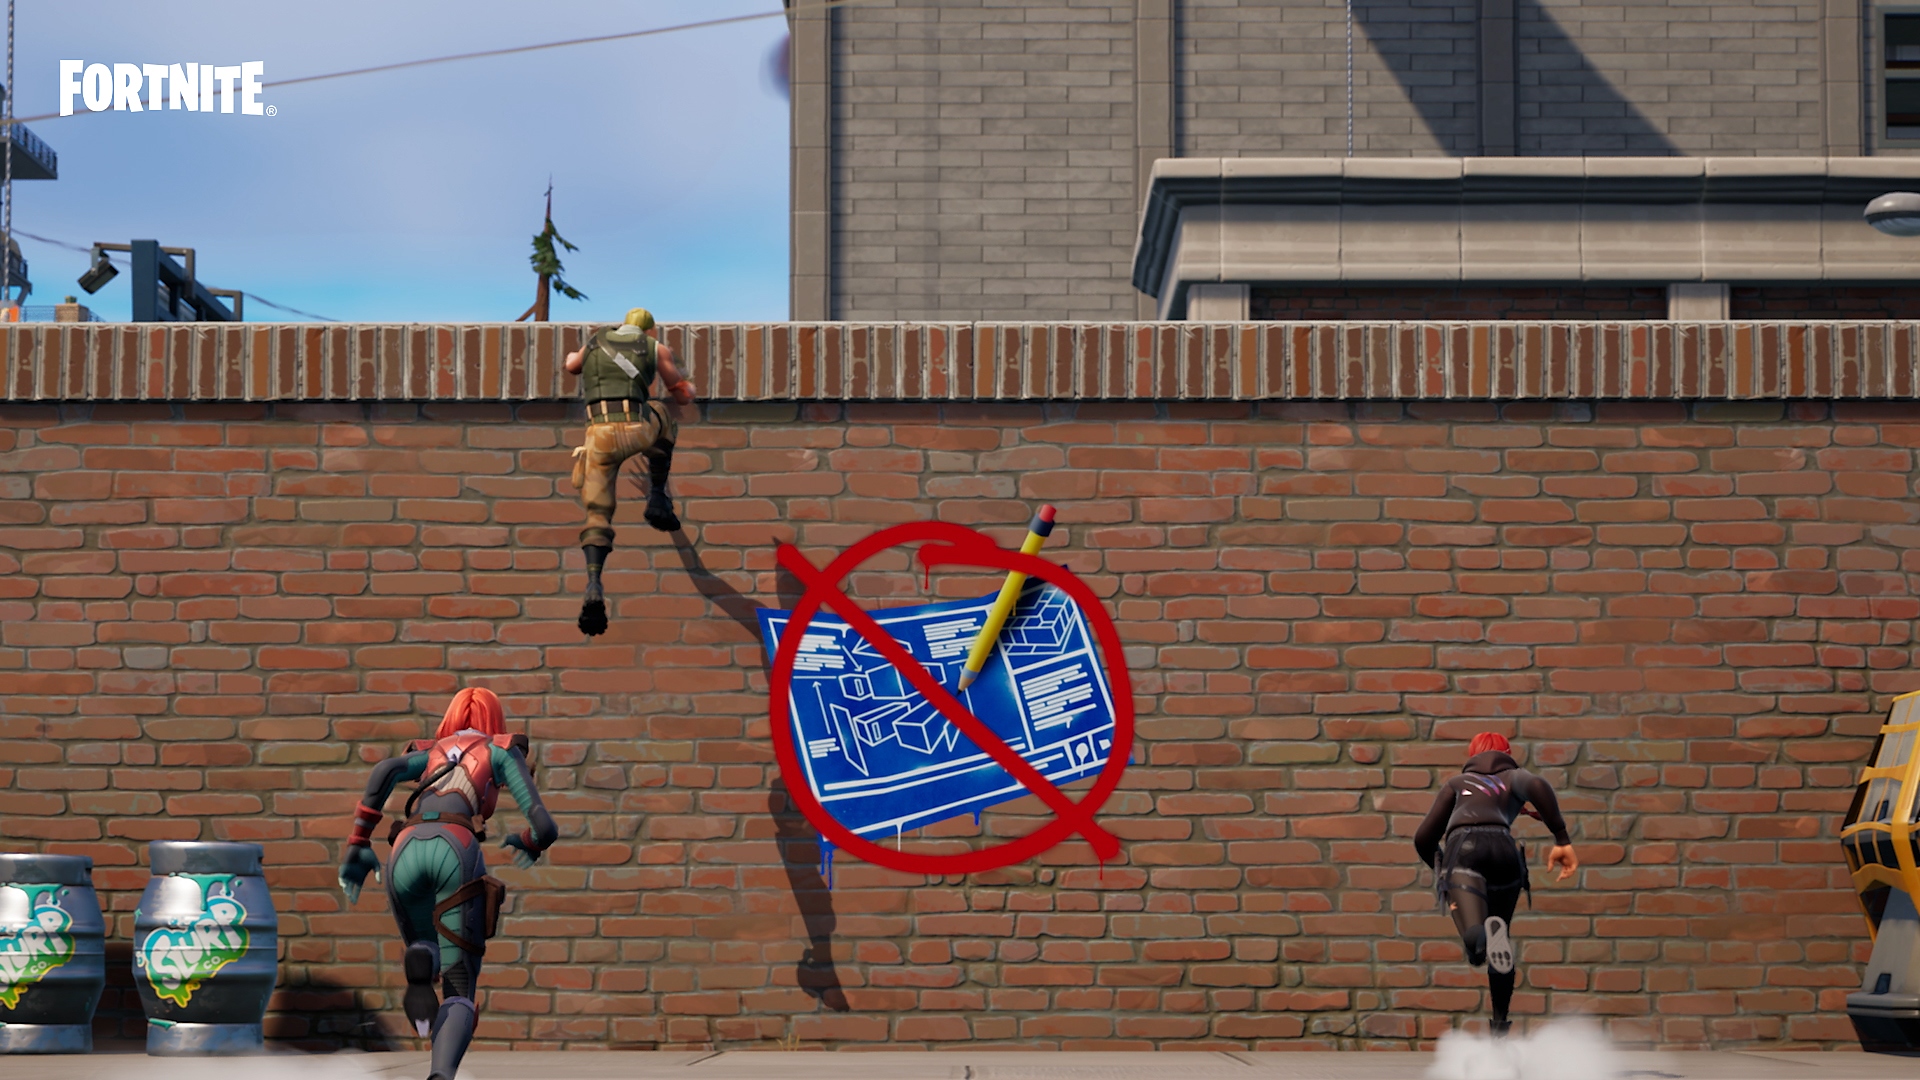 Fortnite zero build mode - characters climbing a wall